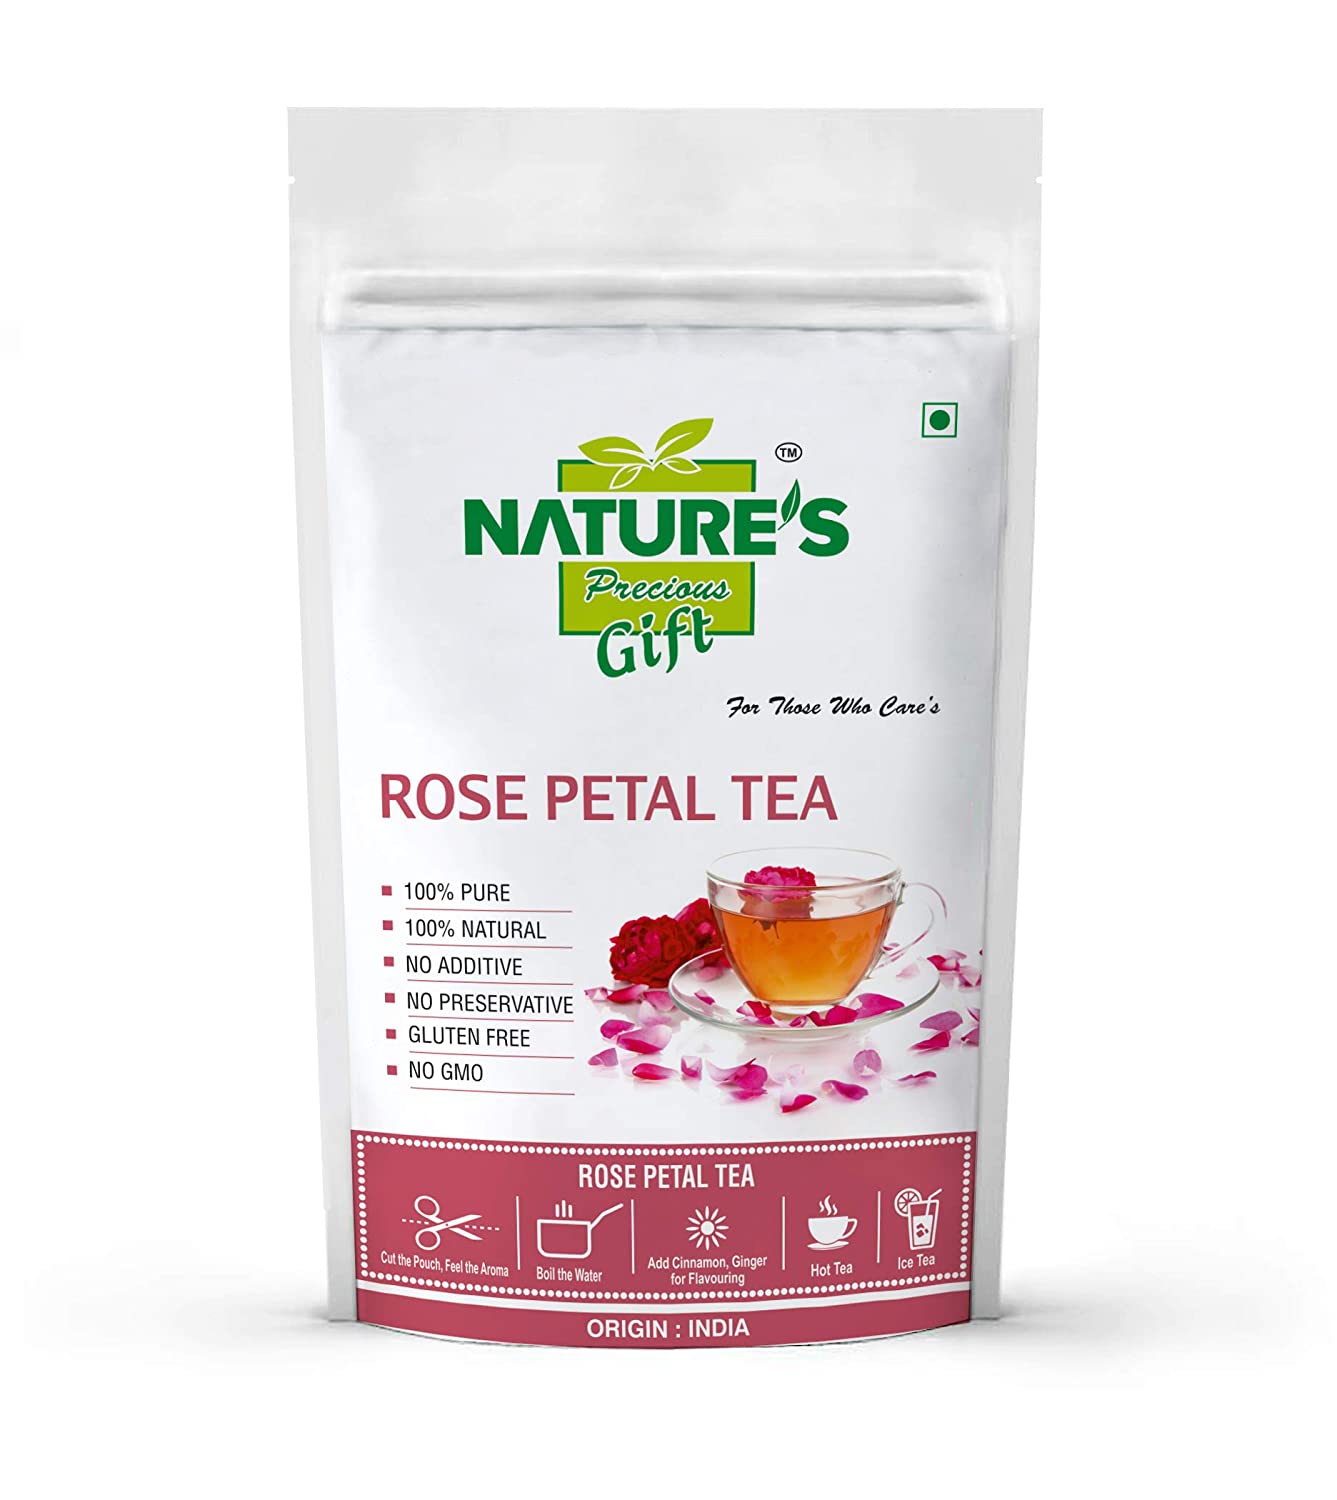 Nature's Gift Rose Petals Dried Rose Tea Image